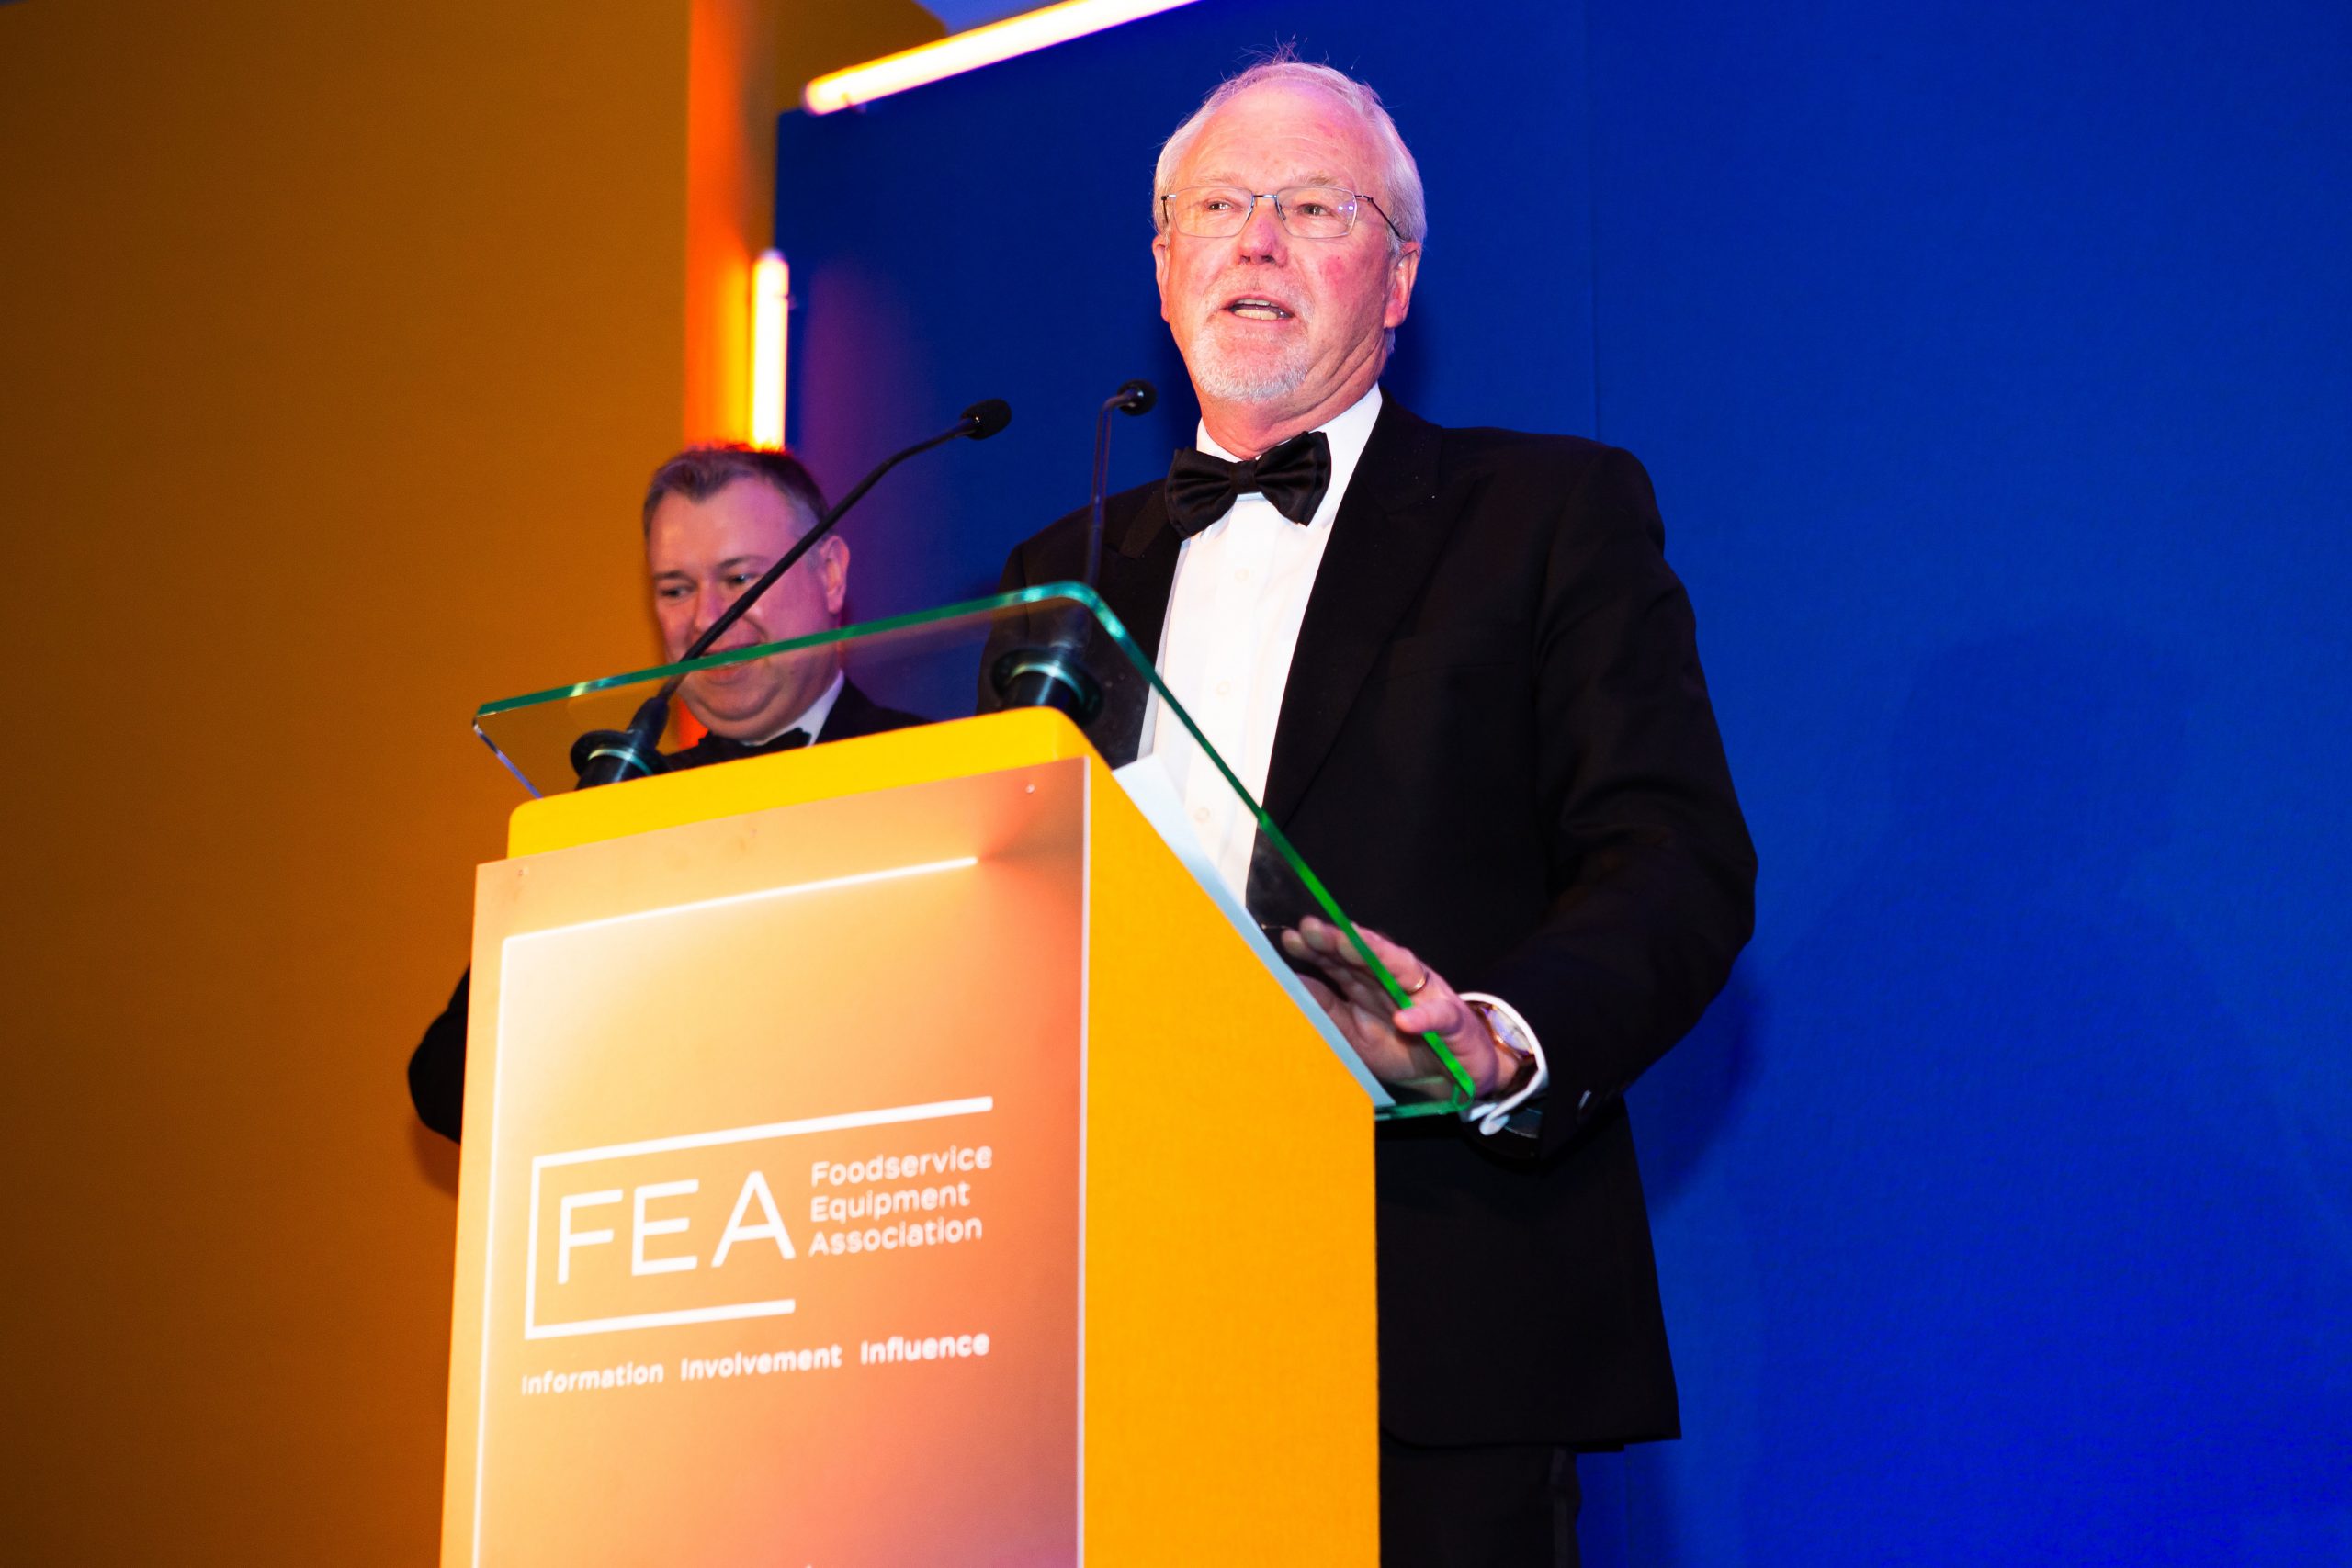 Inspiring, insightful, gritty: Steve Coates wins FEA’s Outstanding Contribution Award